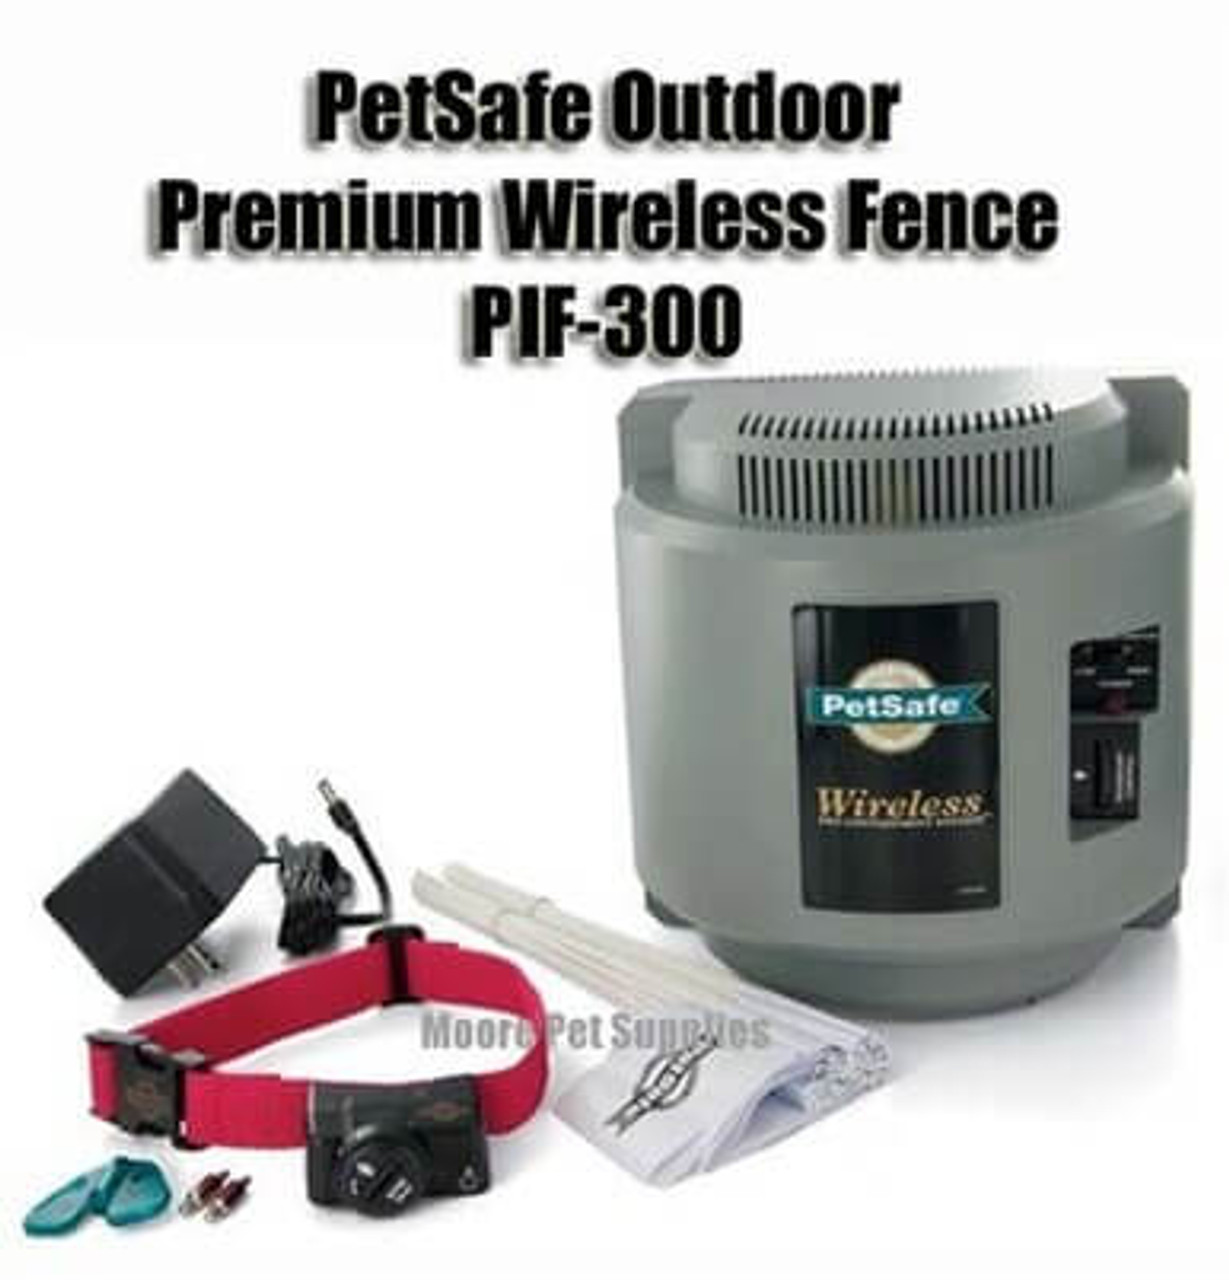 PetSafe Outdoor Premium Wireless Fence PIF-300